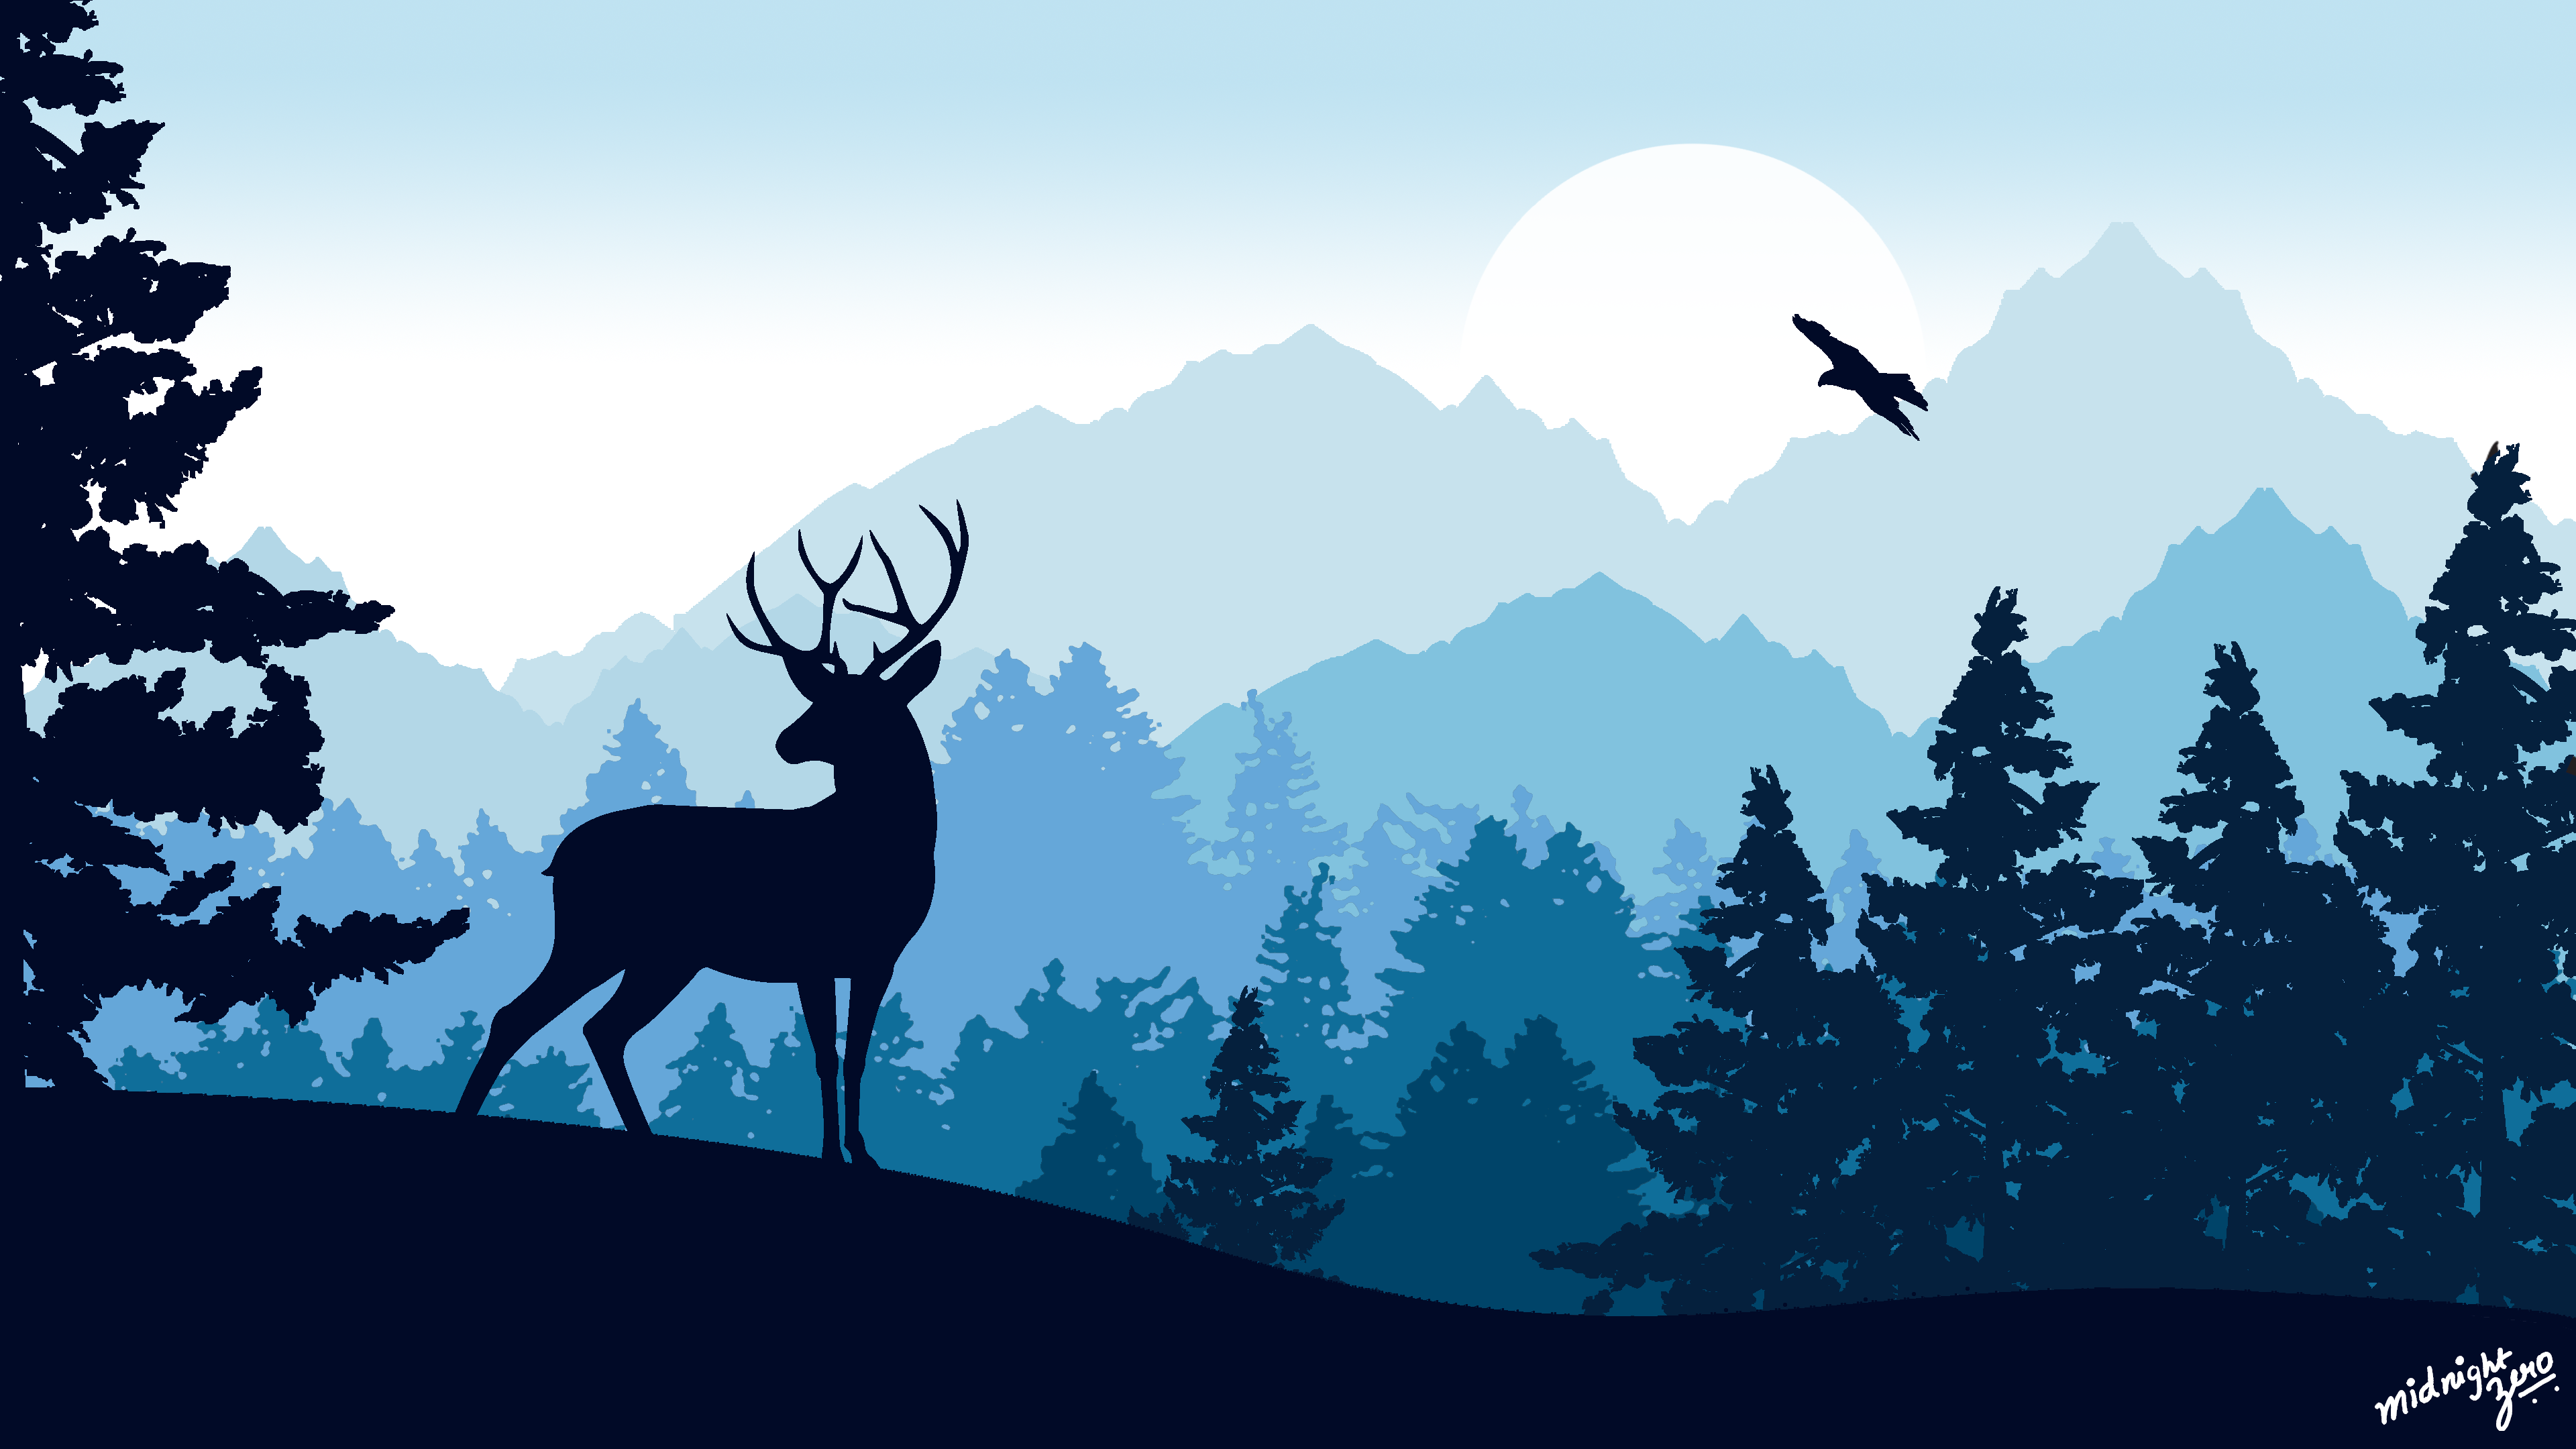 of Forest 4K wallpaper for your desktop or mobile screen